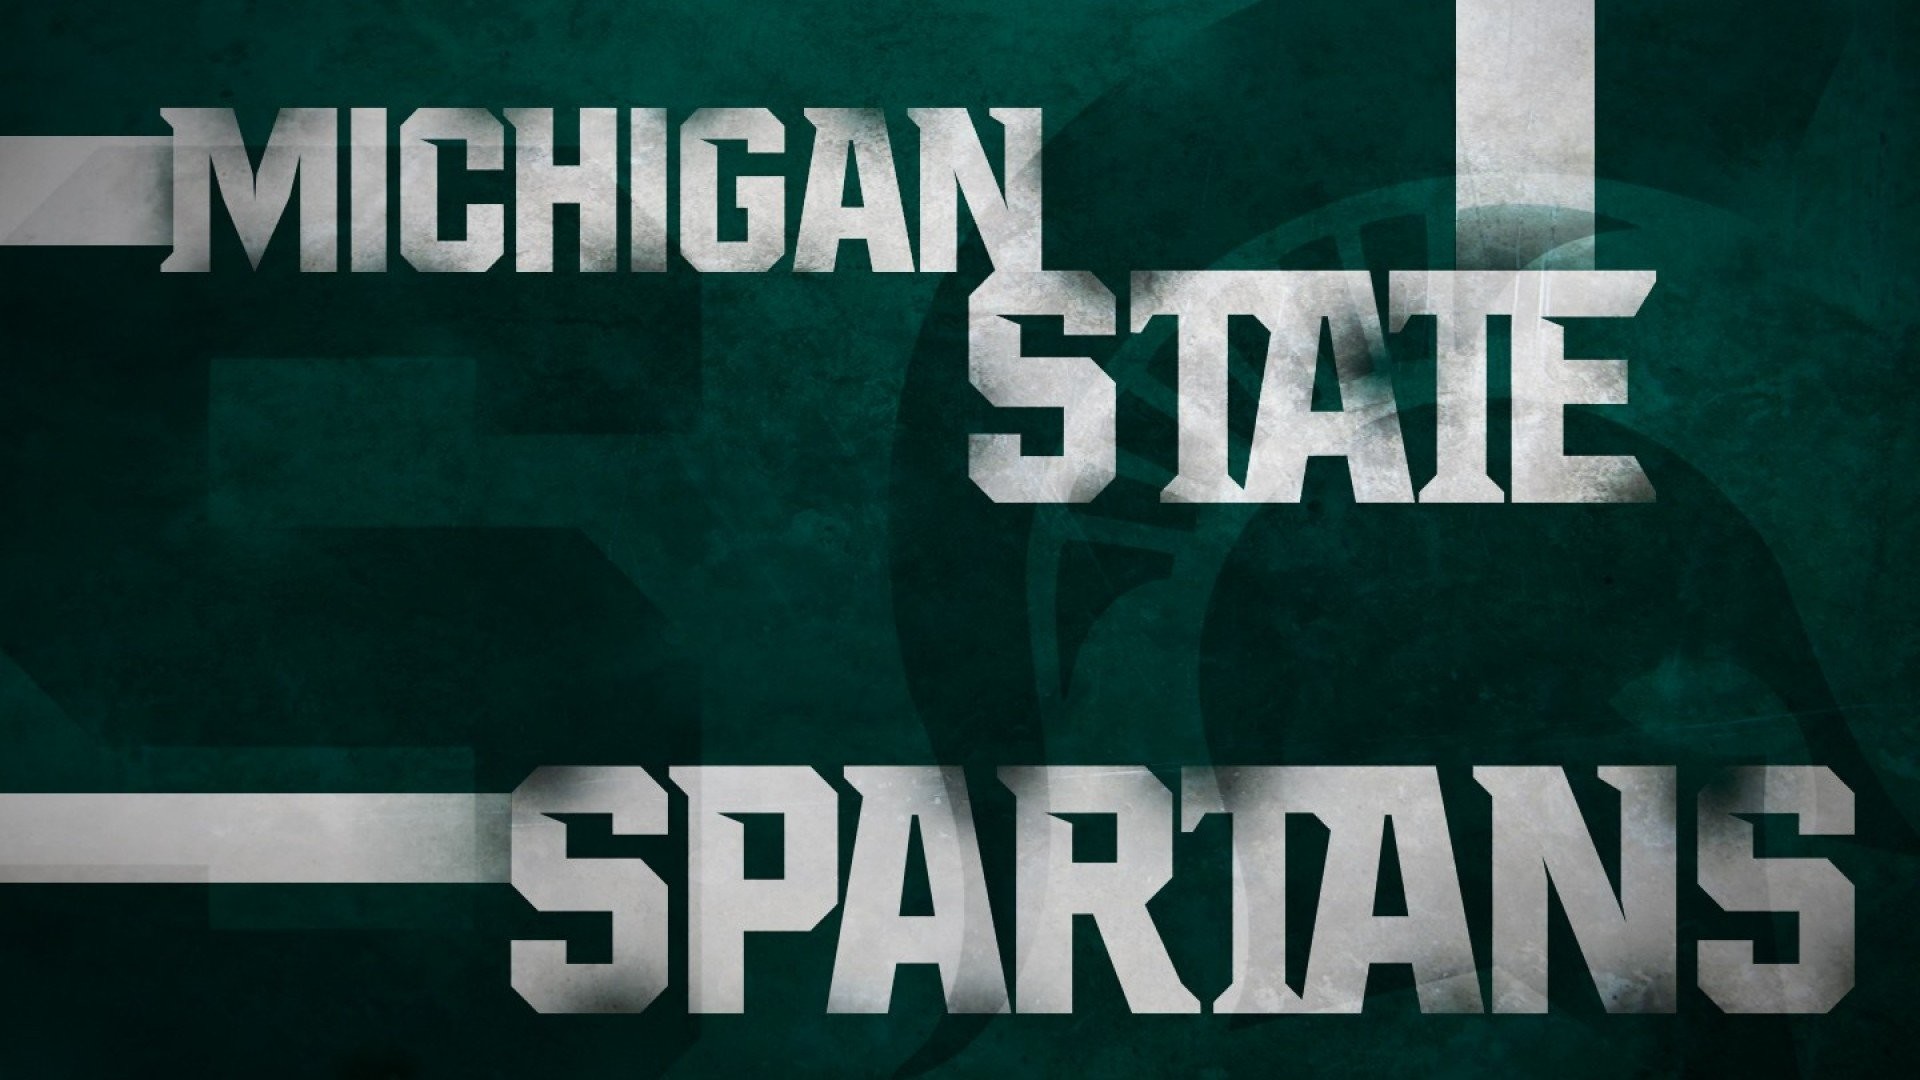 Football Michigan State NCAA wallpaper HD. Free desktop background